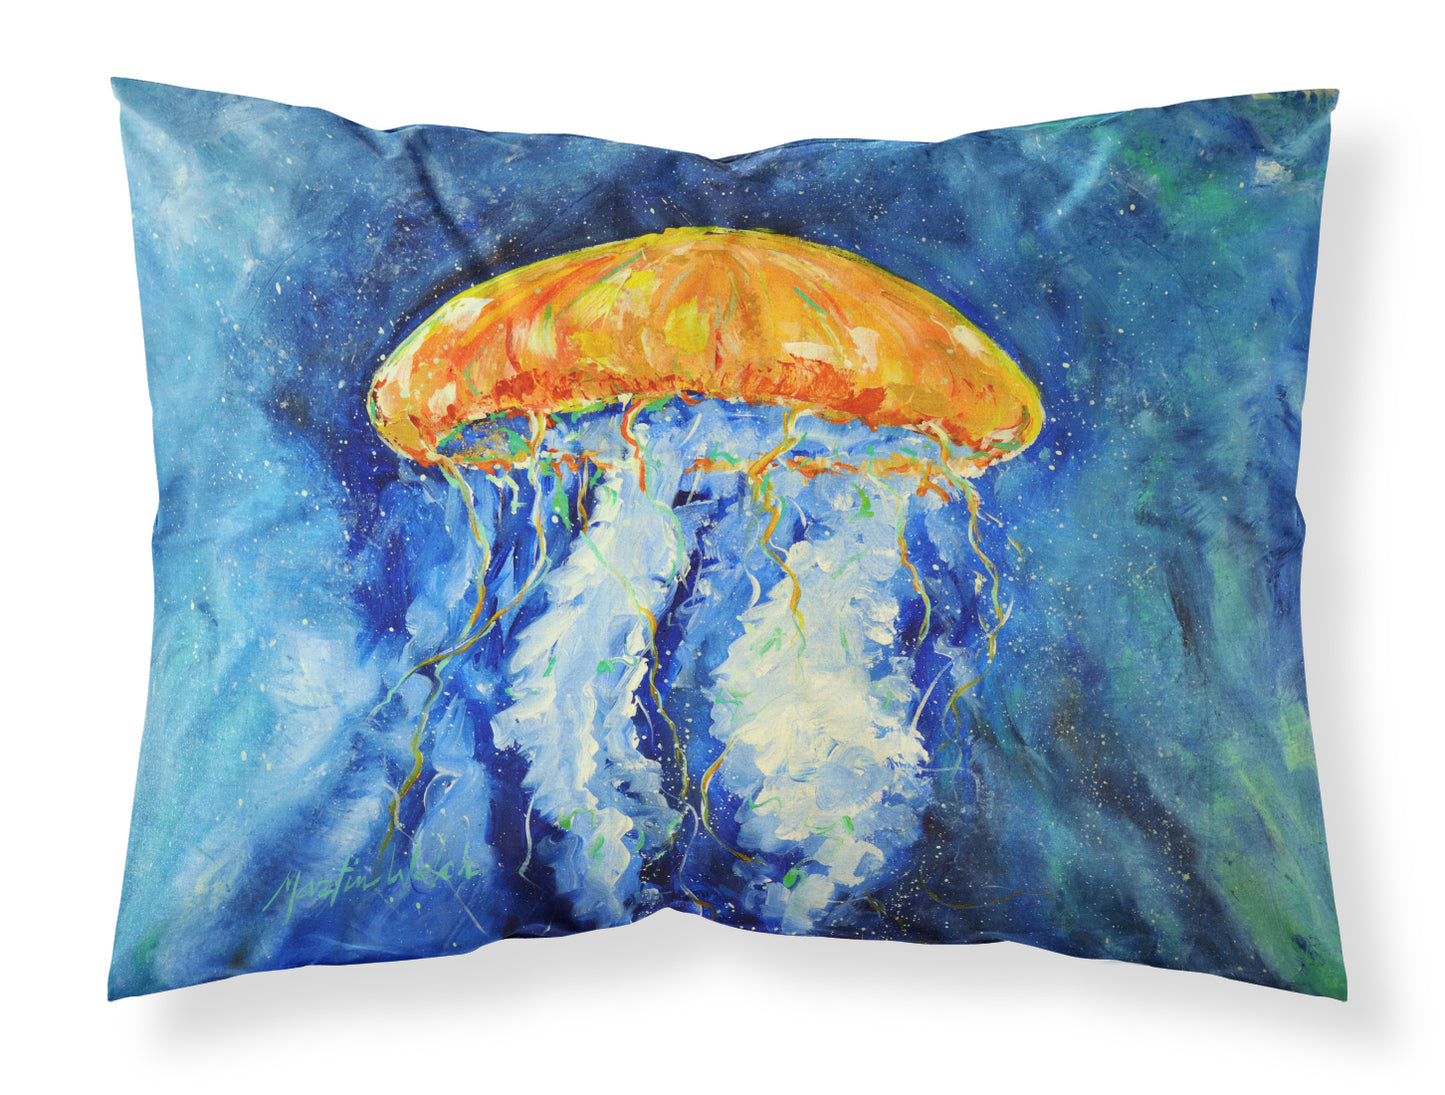 Buy this Calm Water Jellyfish Fabric Standard Pillowcase